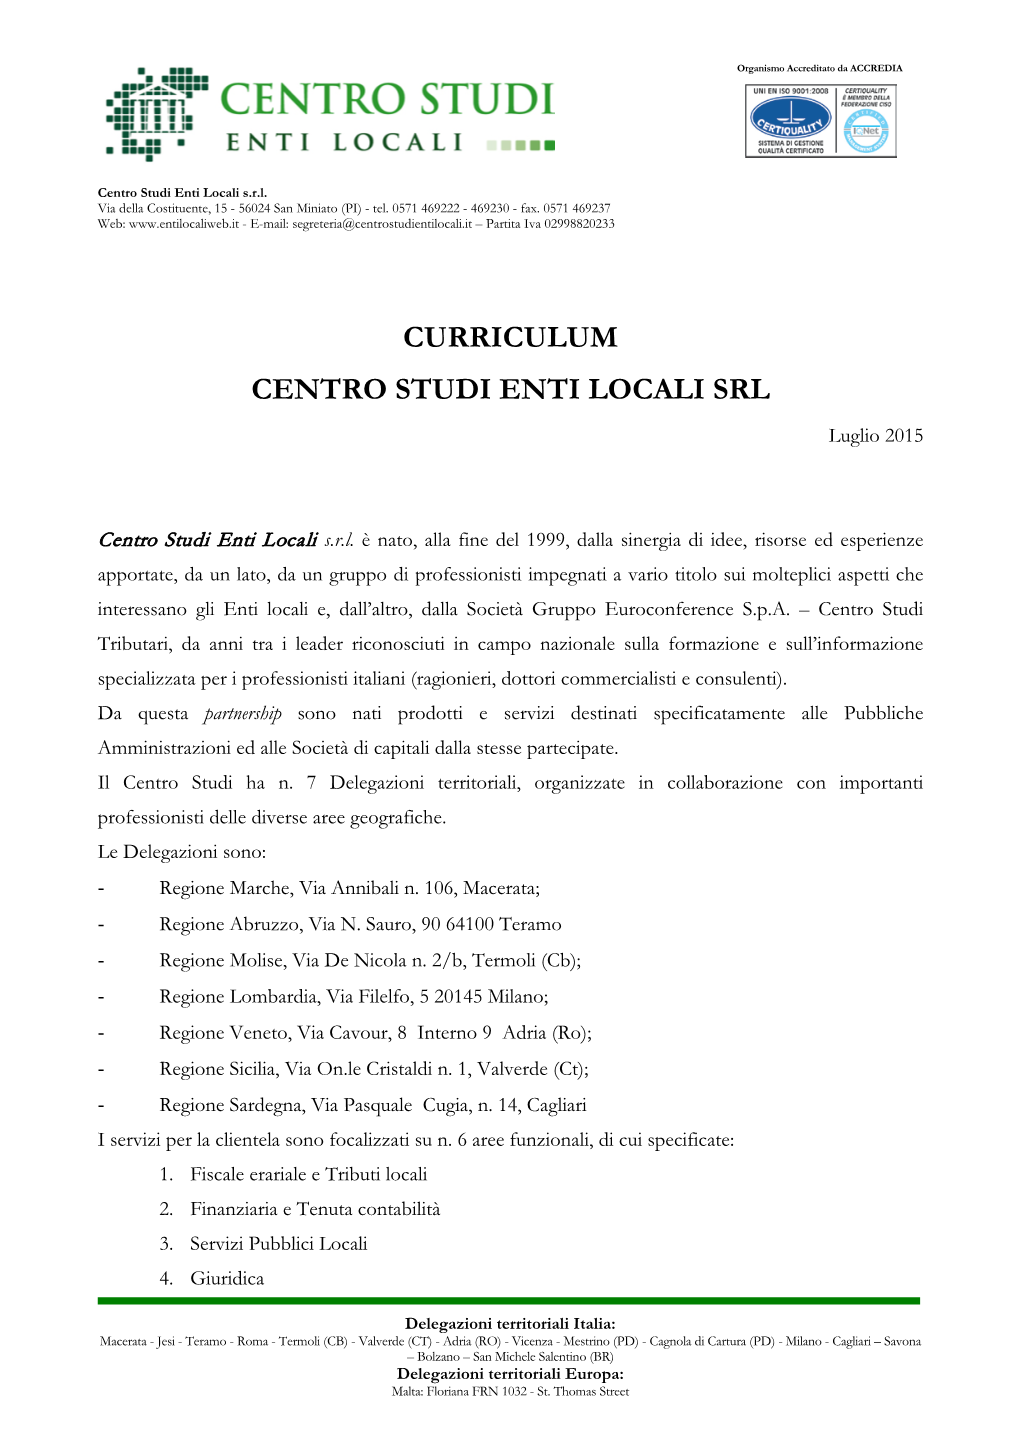 CURRICULUM CENTRO STUDI ENTI LOCALI SRL Luglio 2015